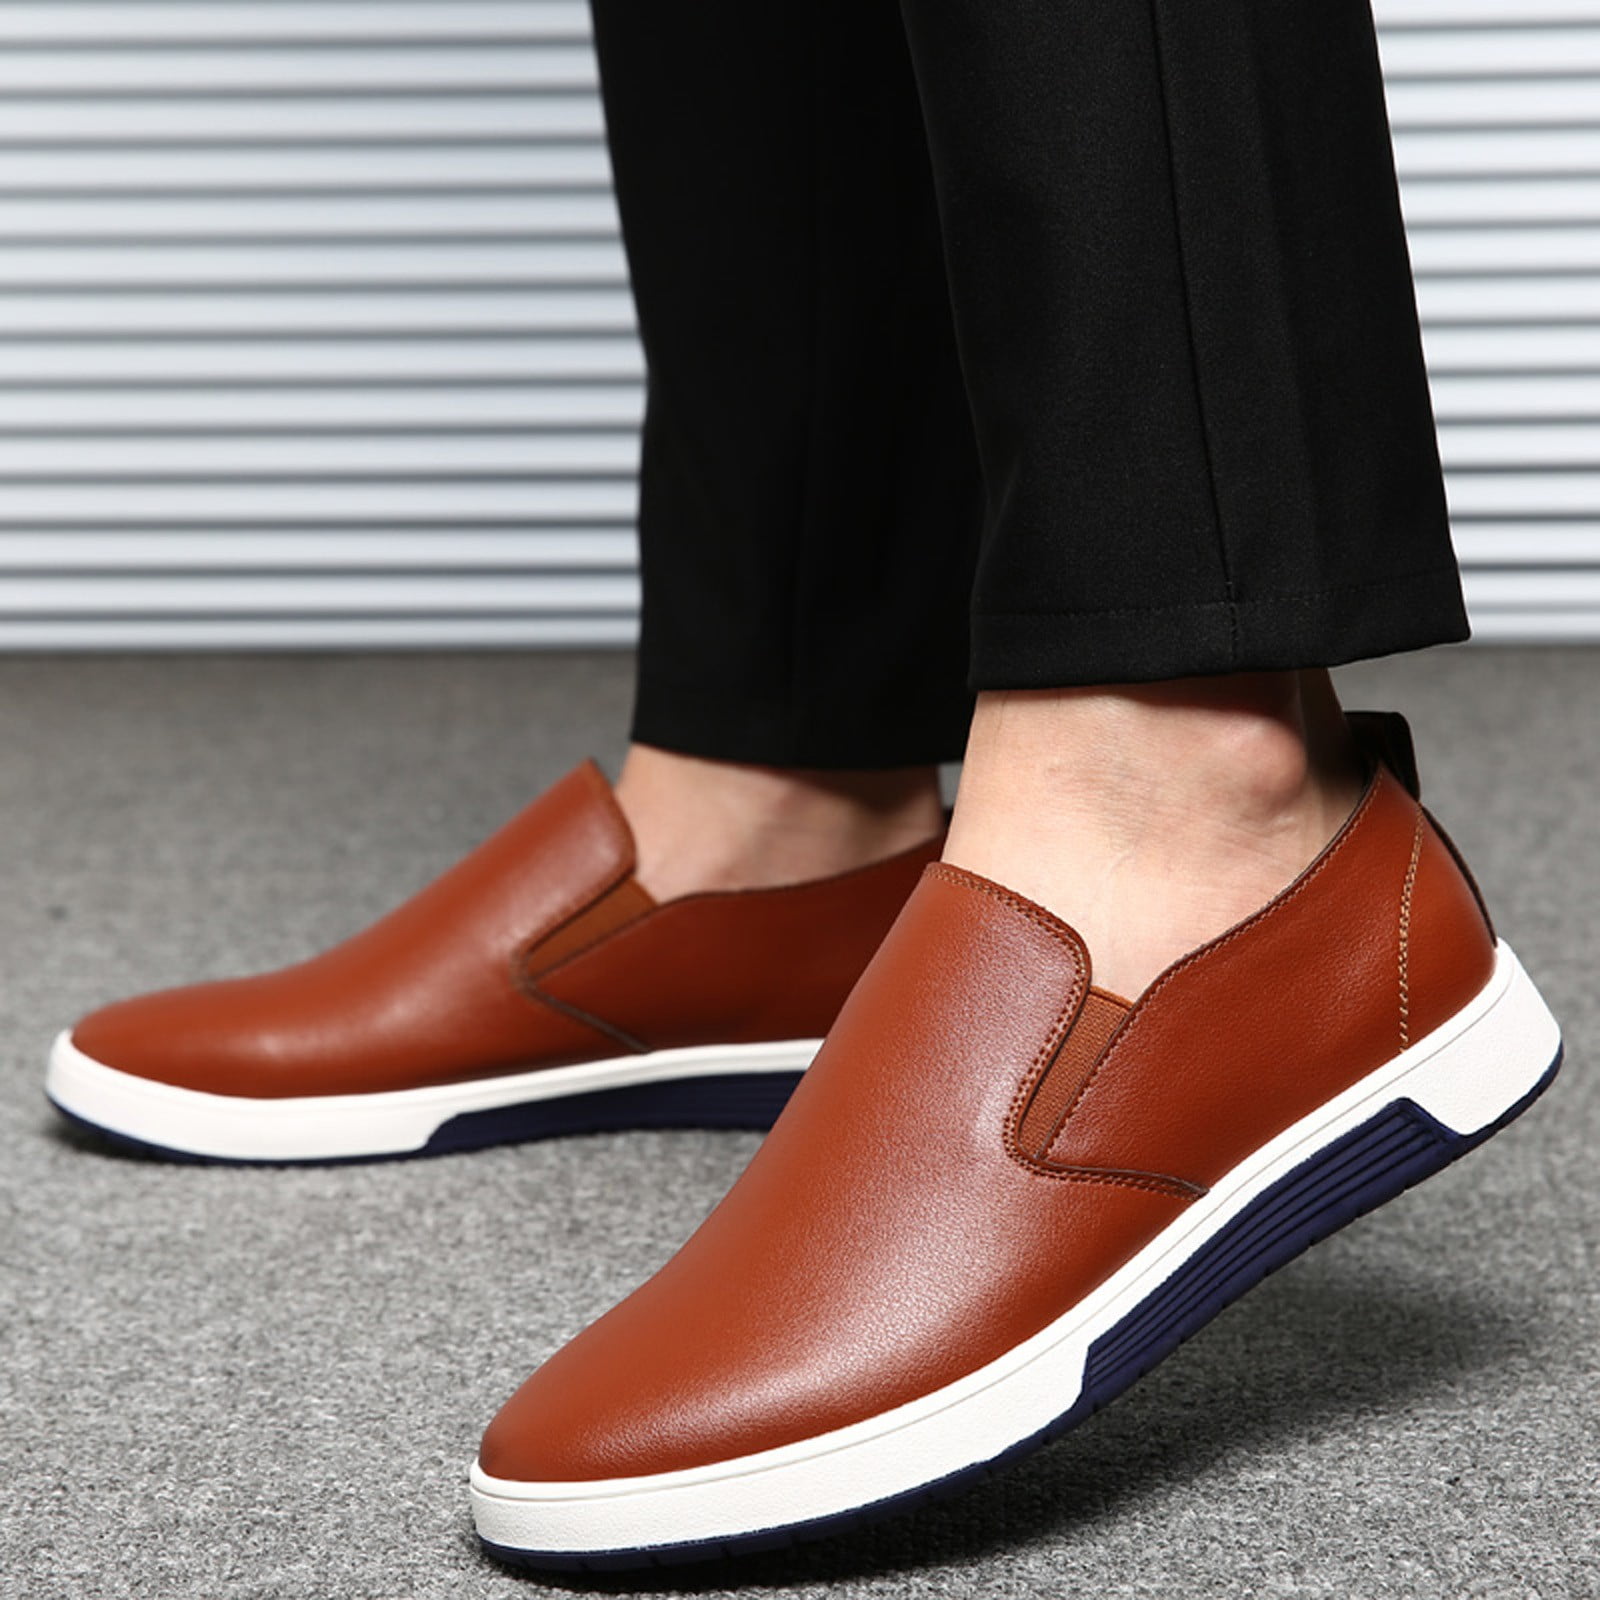 XIPAI Men's Casual Lofer Shoes Slip On Fashion Sneakers 